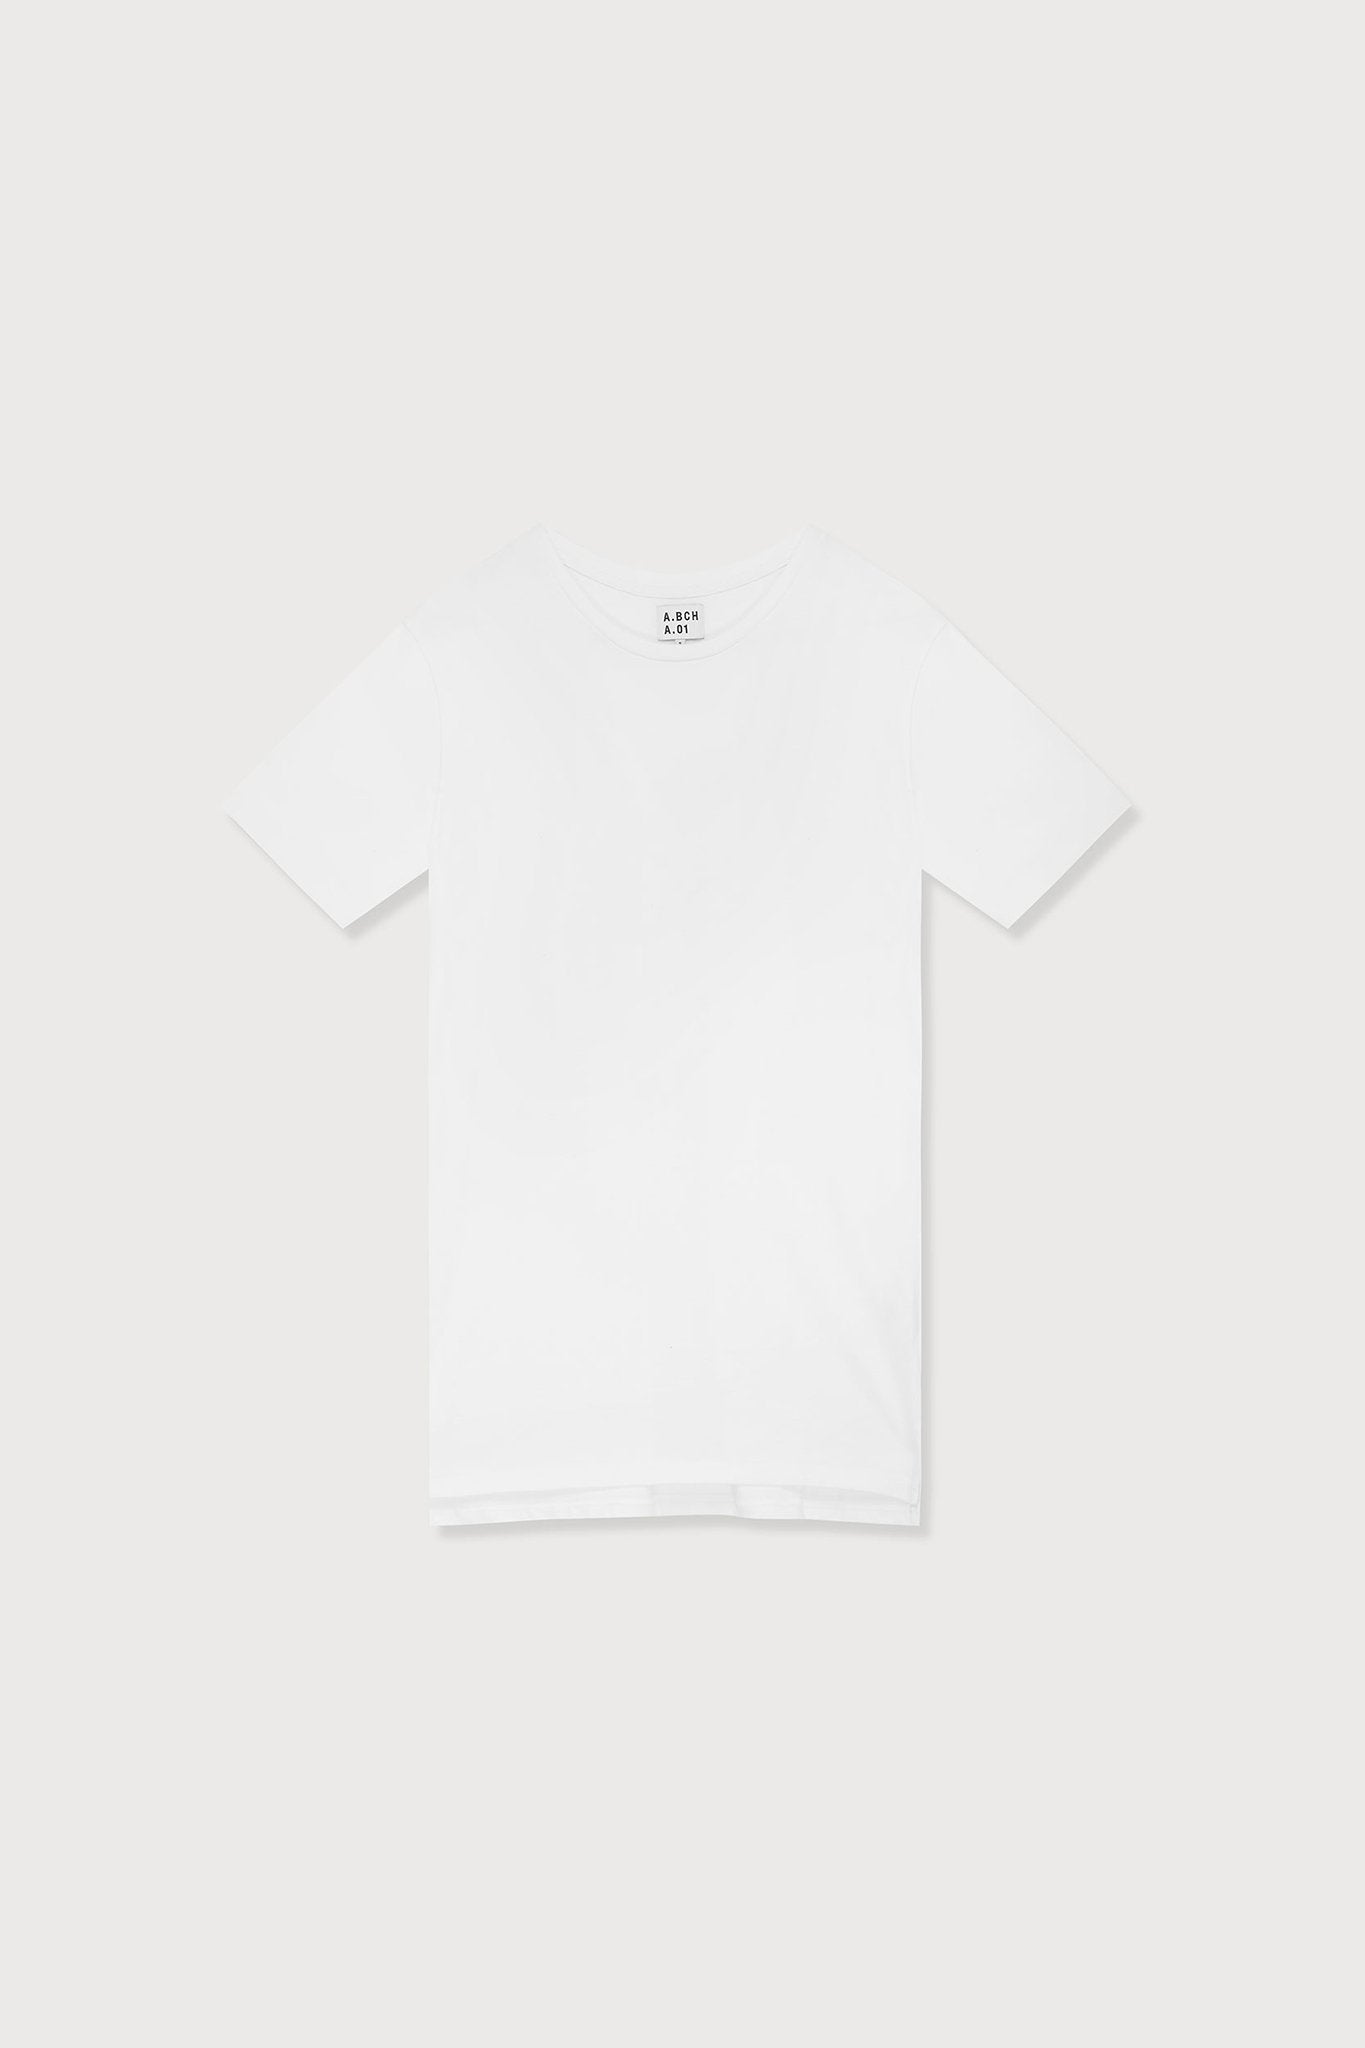 A.BCH A.01 White T-Shirt in Organic Cotton